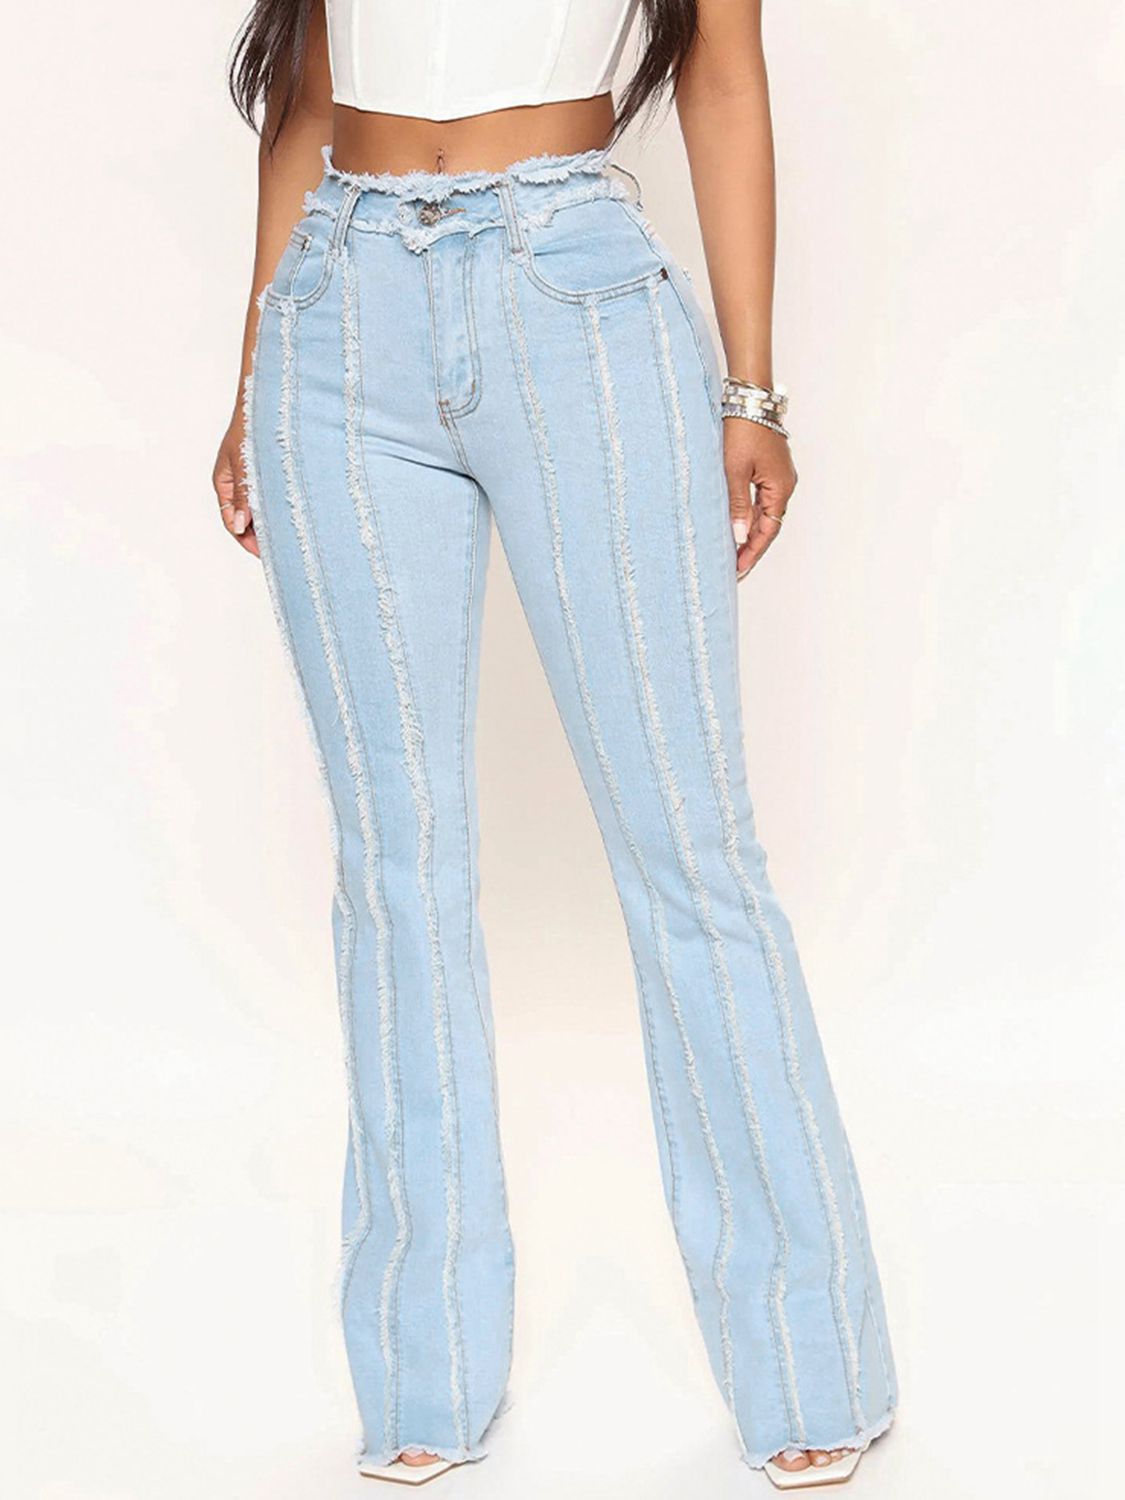 Striped Raw Hem Jeans - Dash Trend